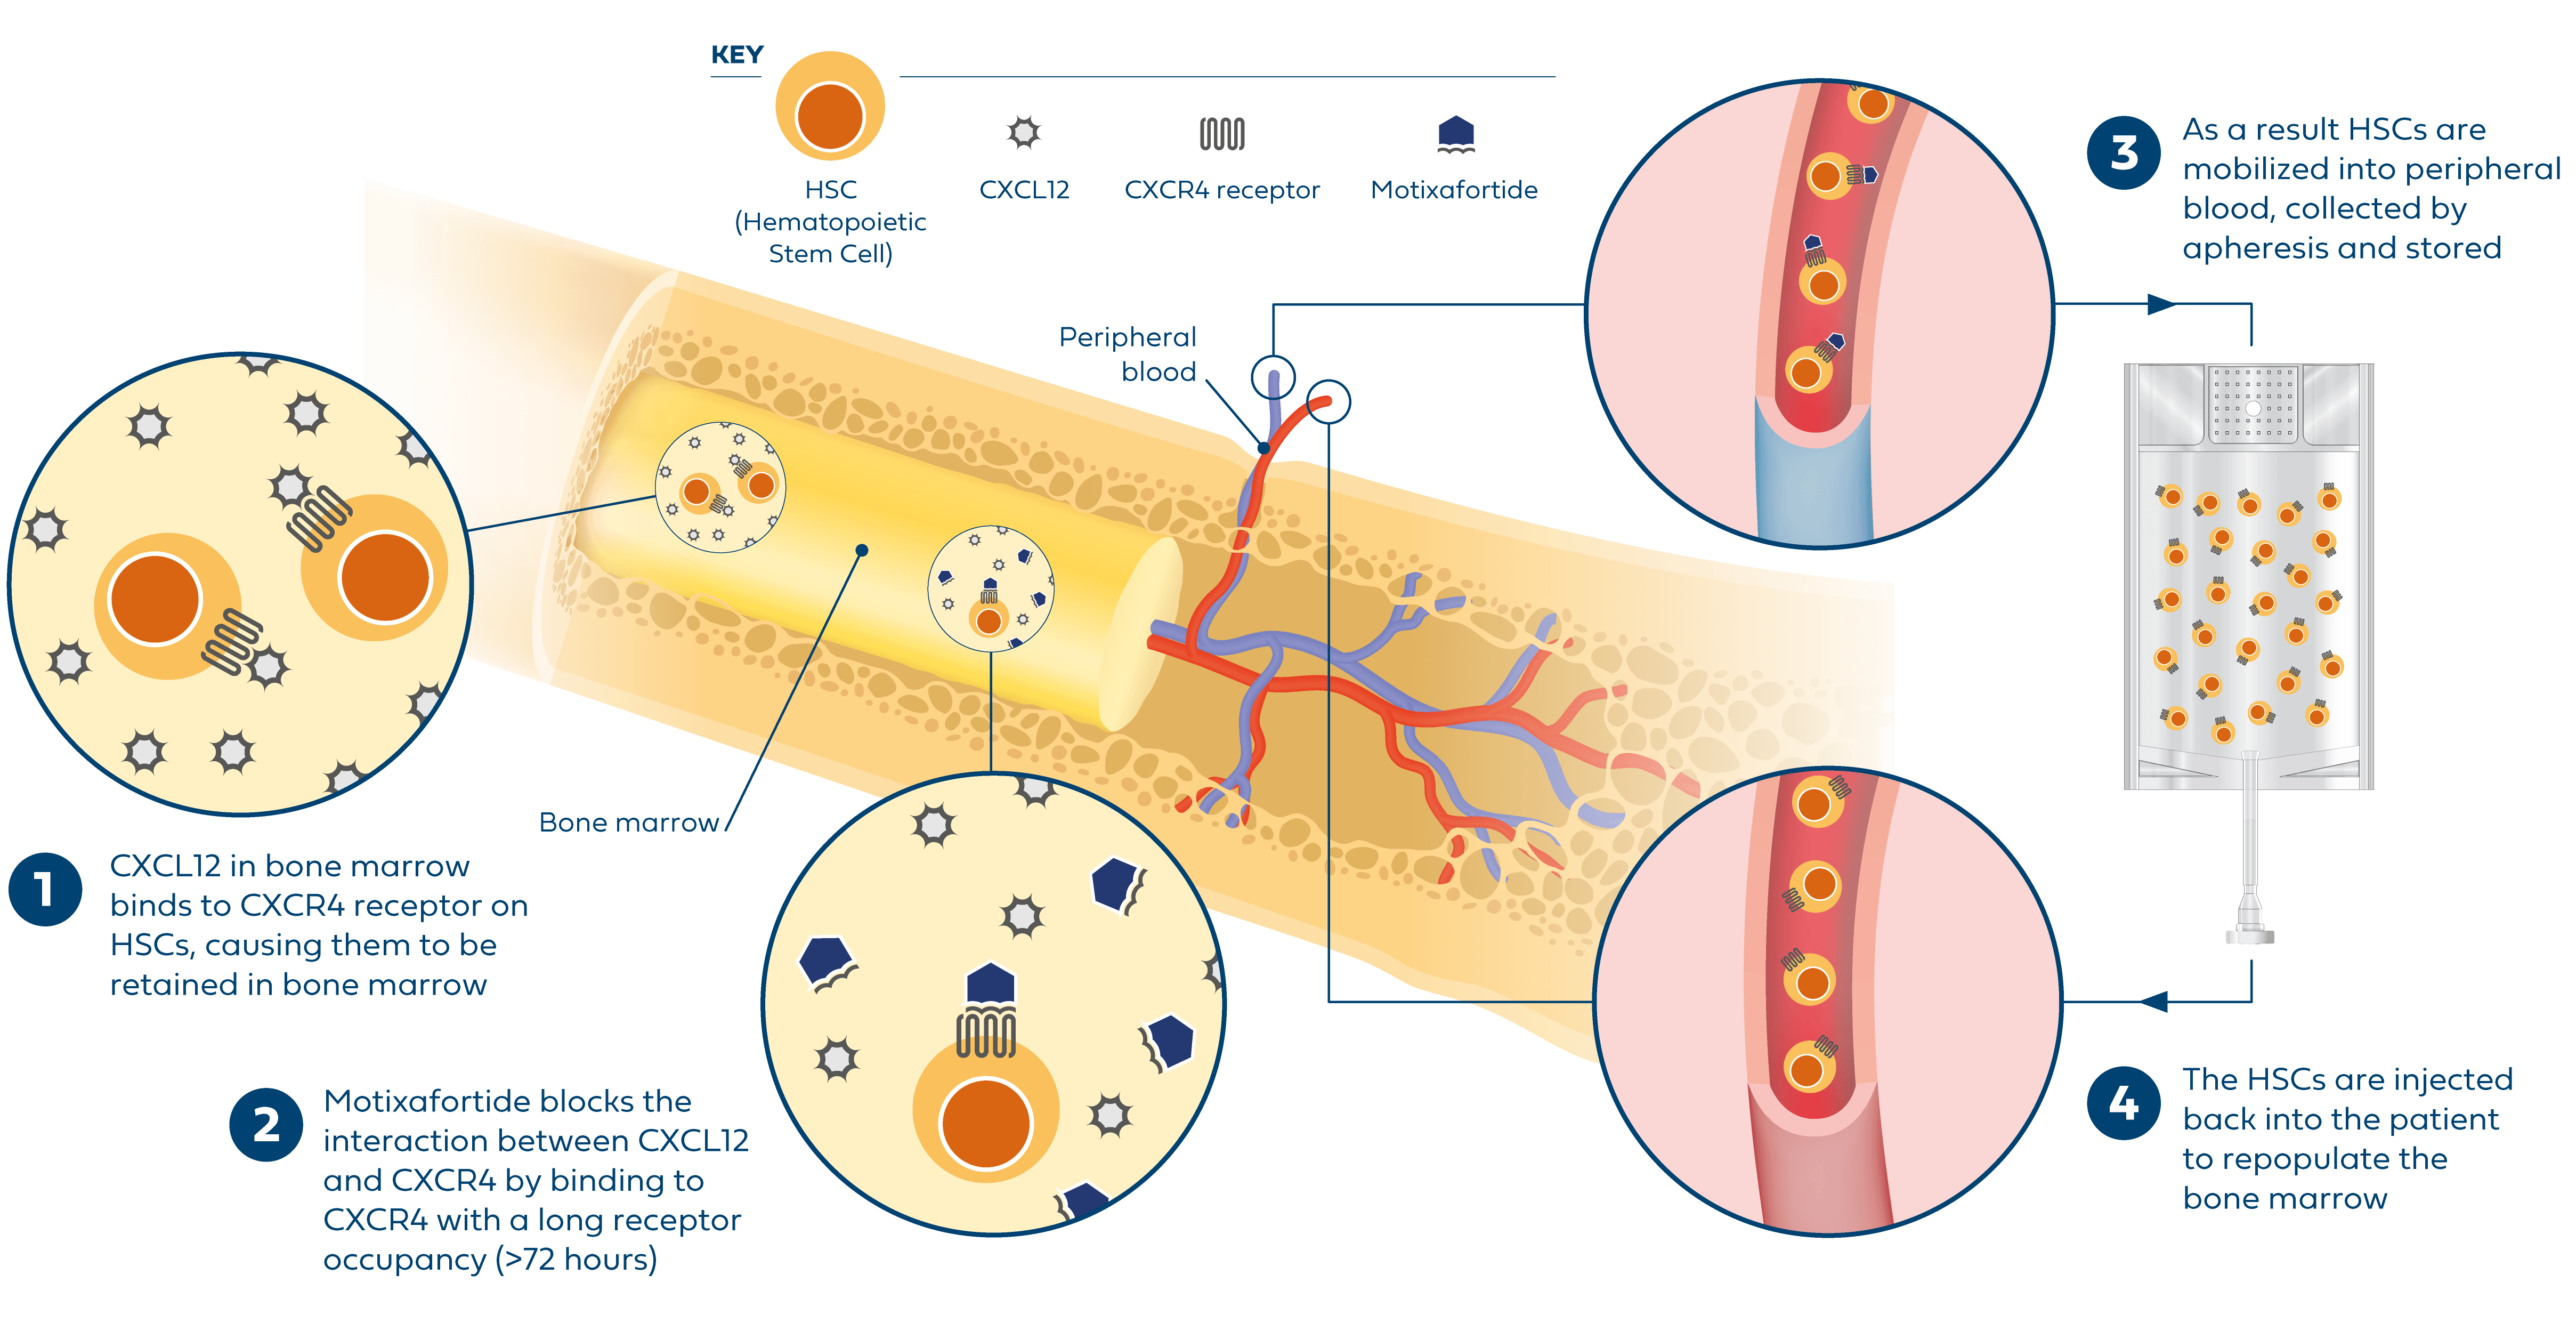 Scientific illustration depicting how motixafortide works in stem cell mobilization